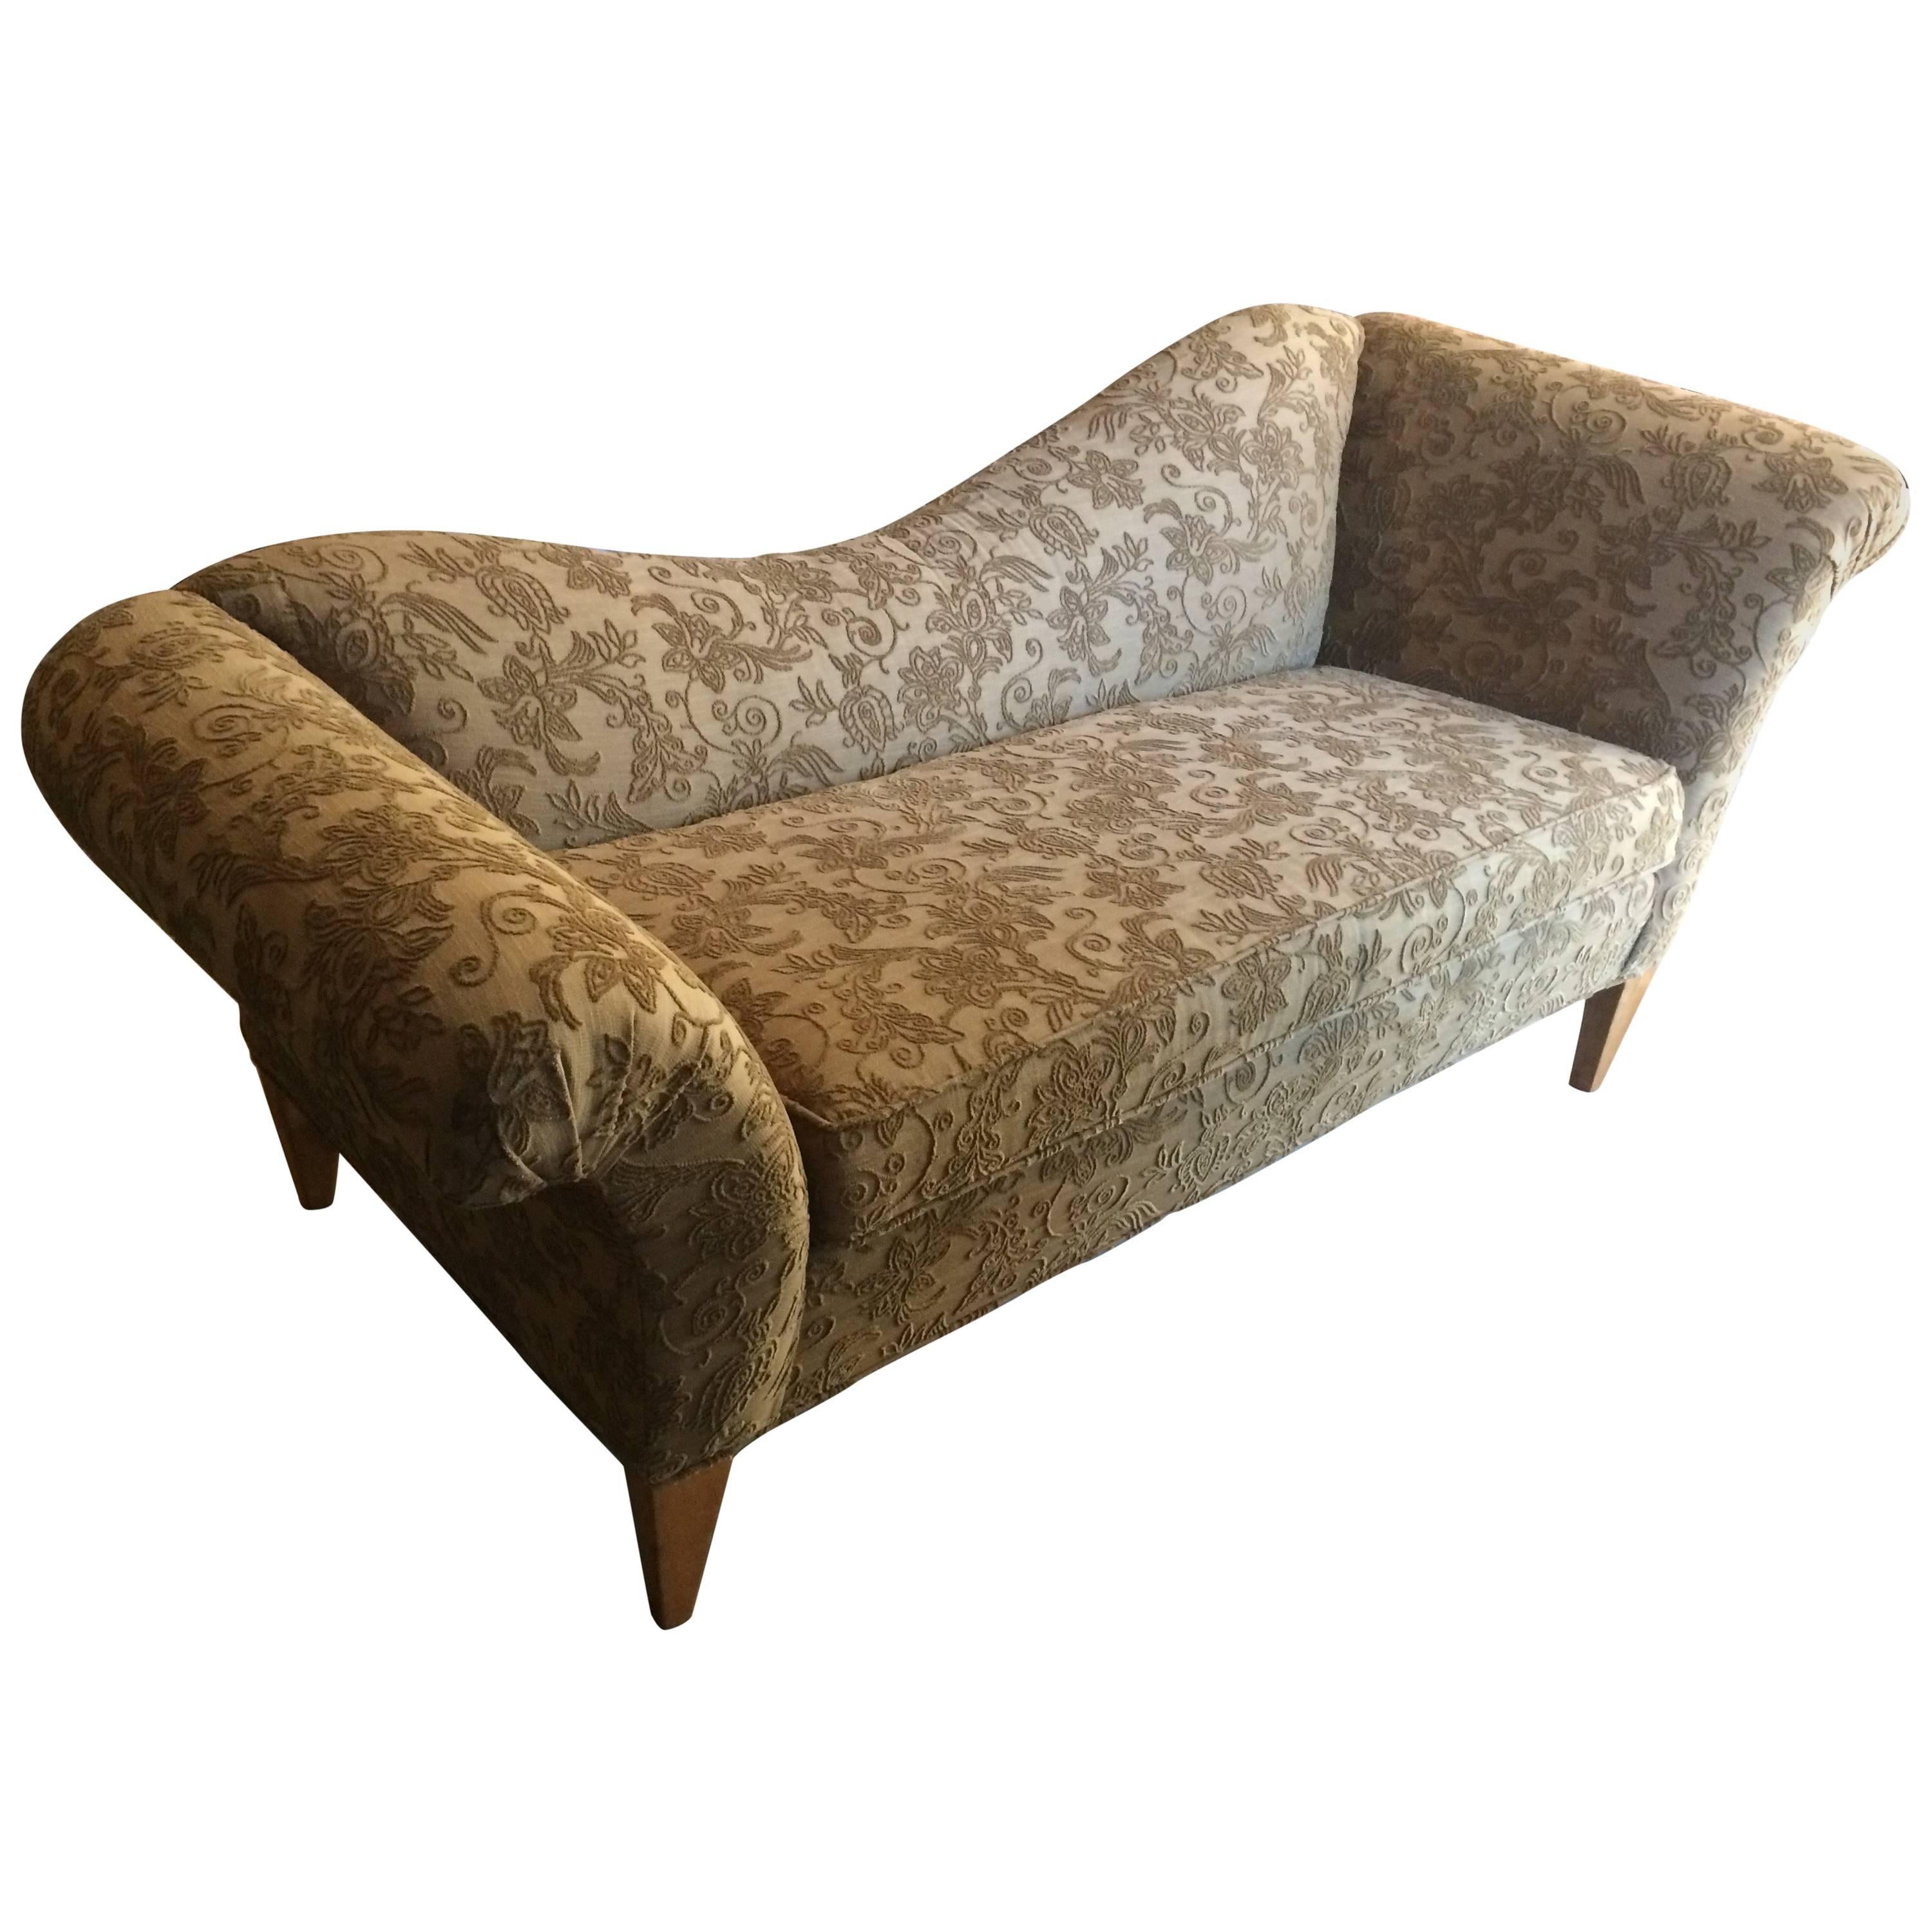 Charming Upholstered Recamier Style Sofa